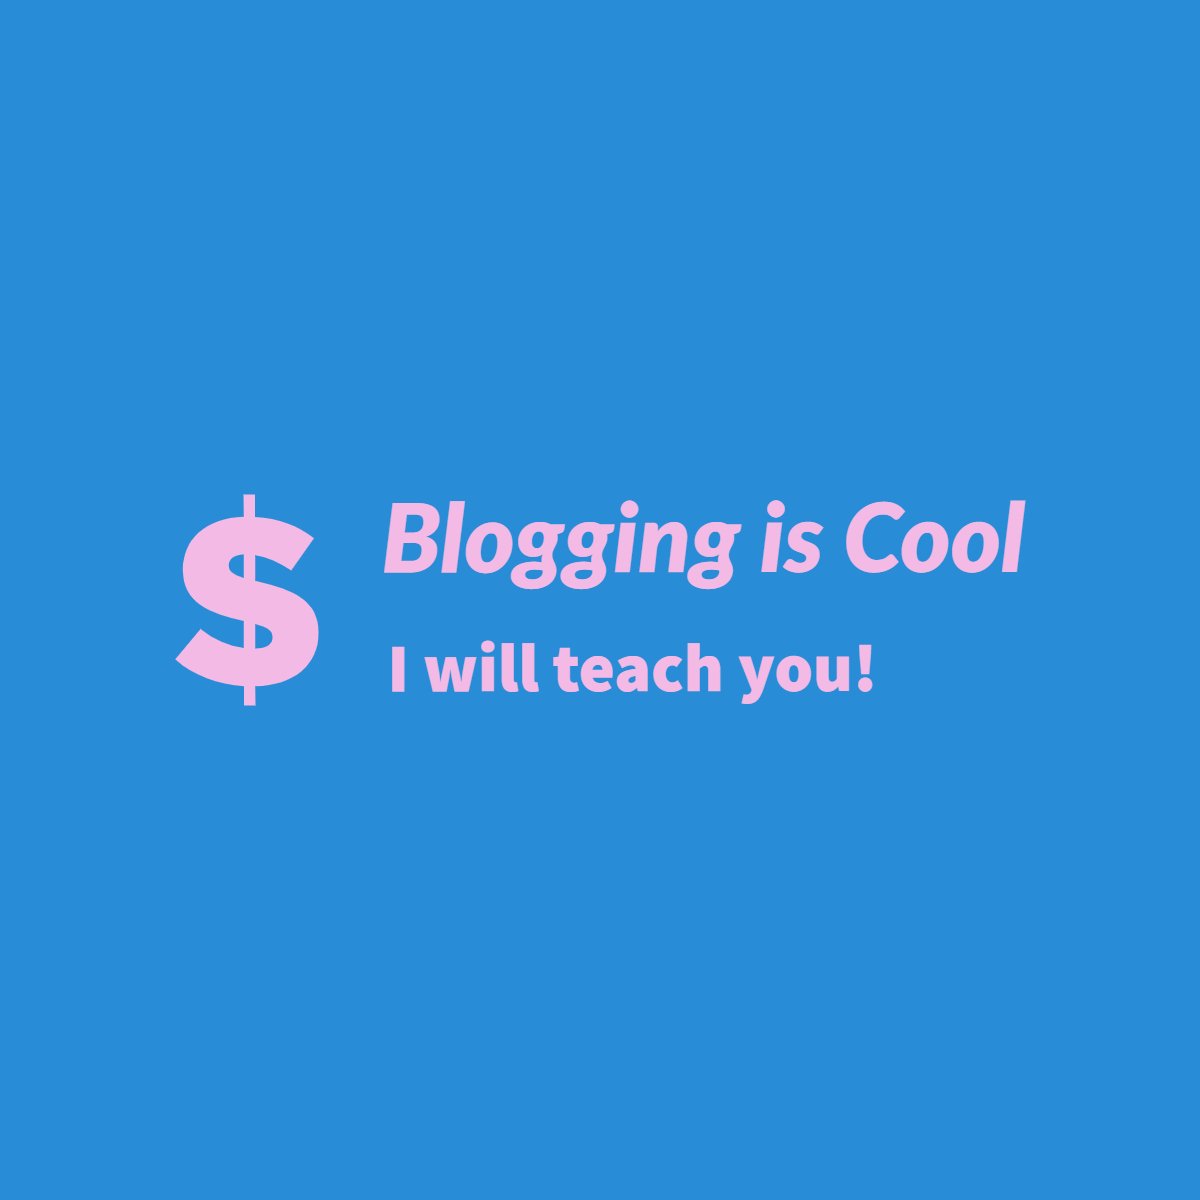 bloggingiscool.com creating compelling headlines for your blog